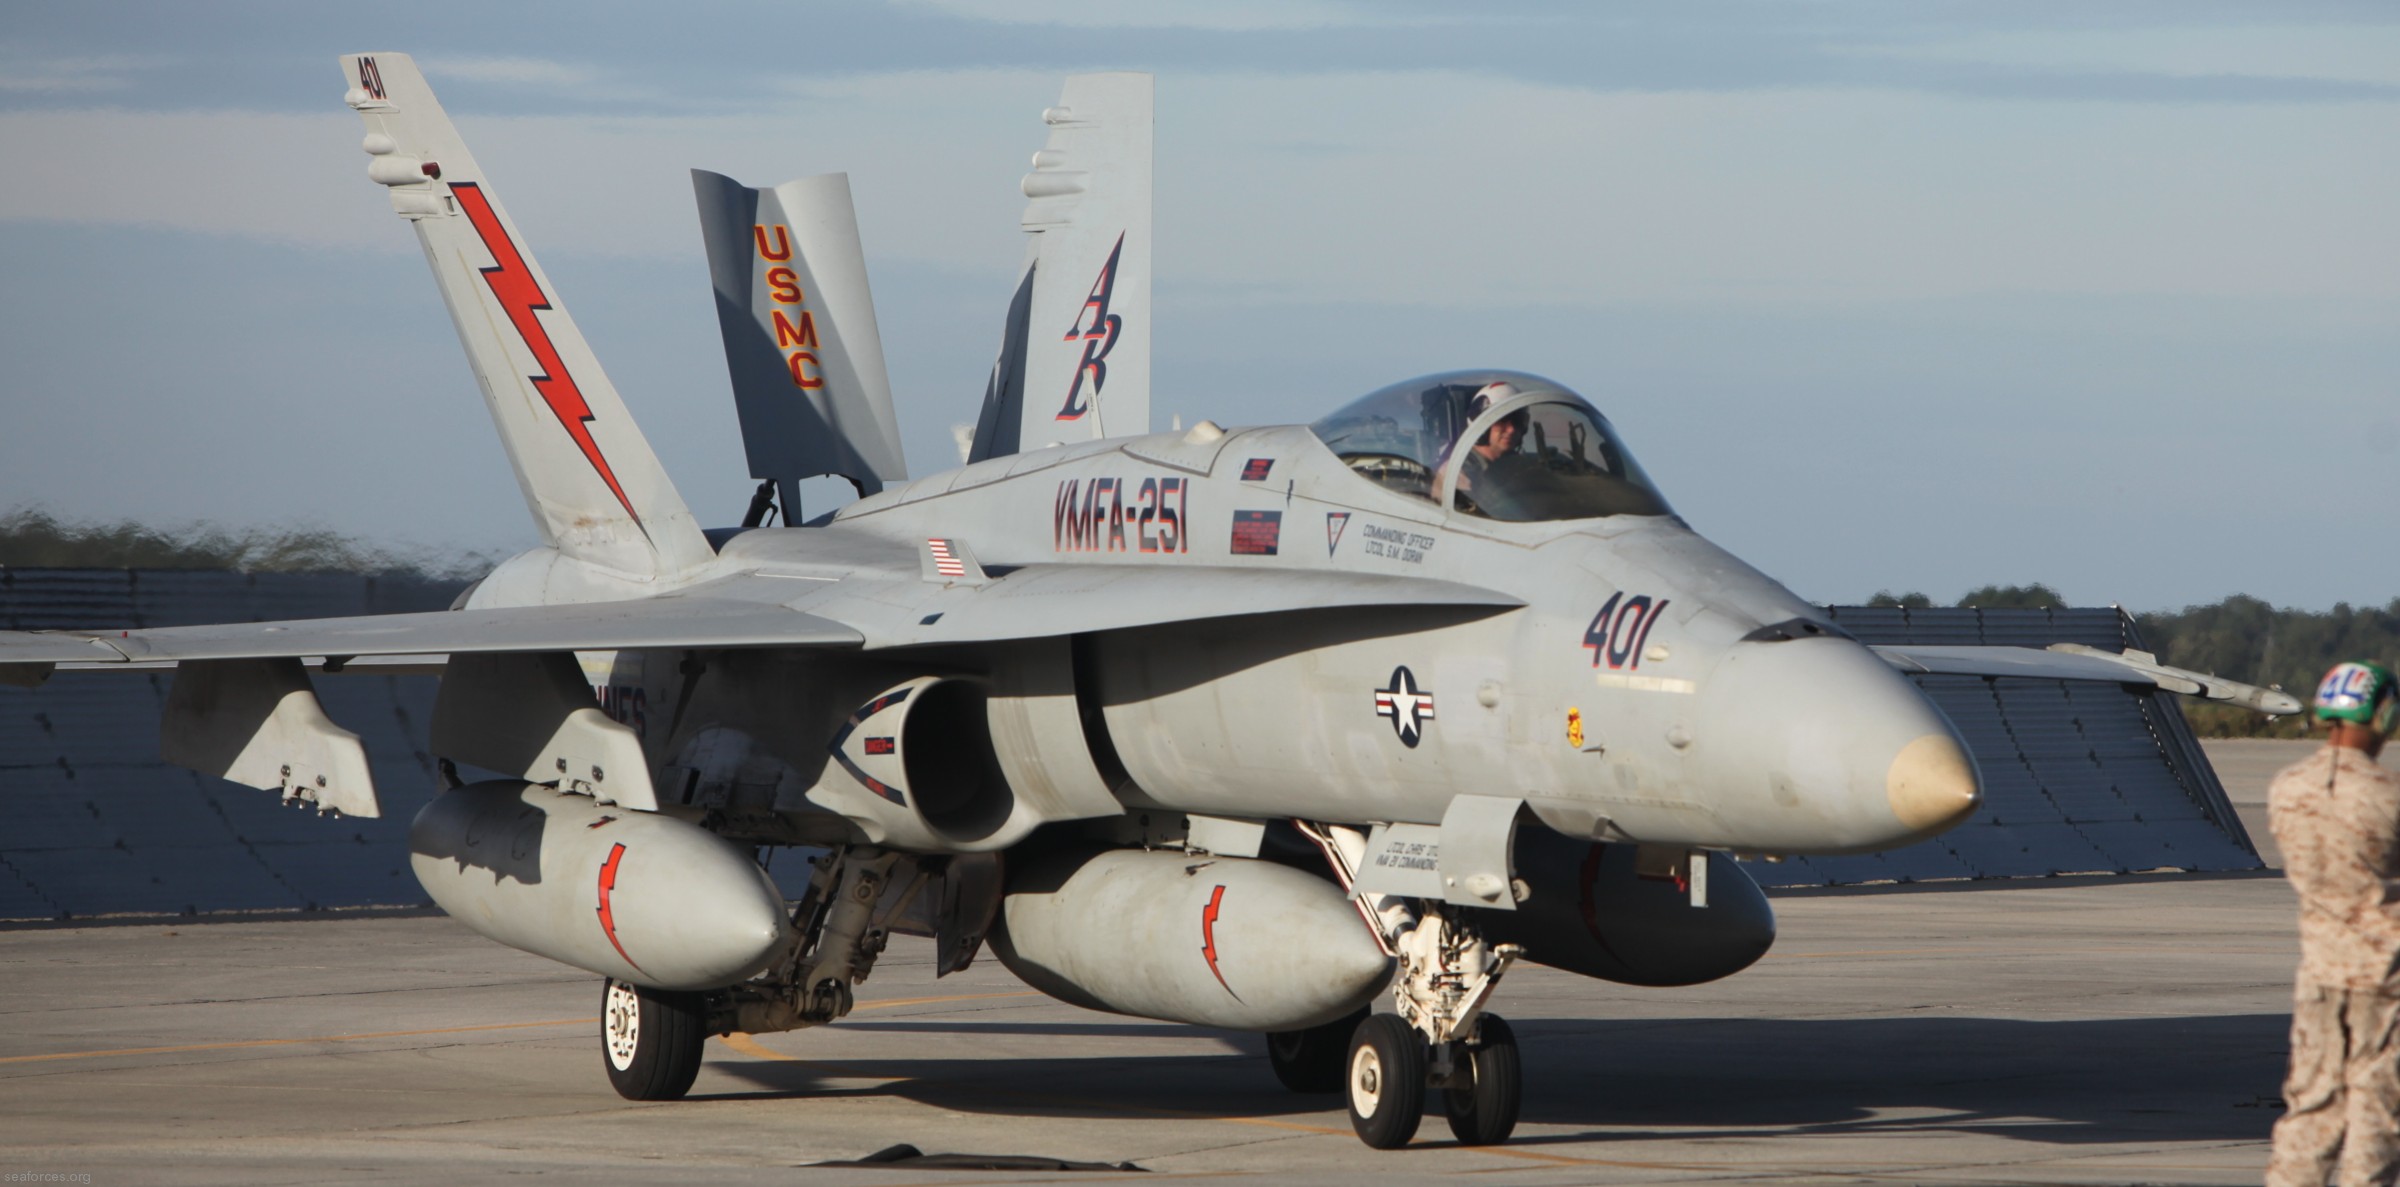 vmfa-251 thunderbolts marine fighter attack squadron usmc f/a-18 hornet mcas beaufort south carolina 138x